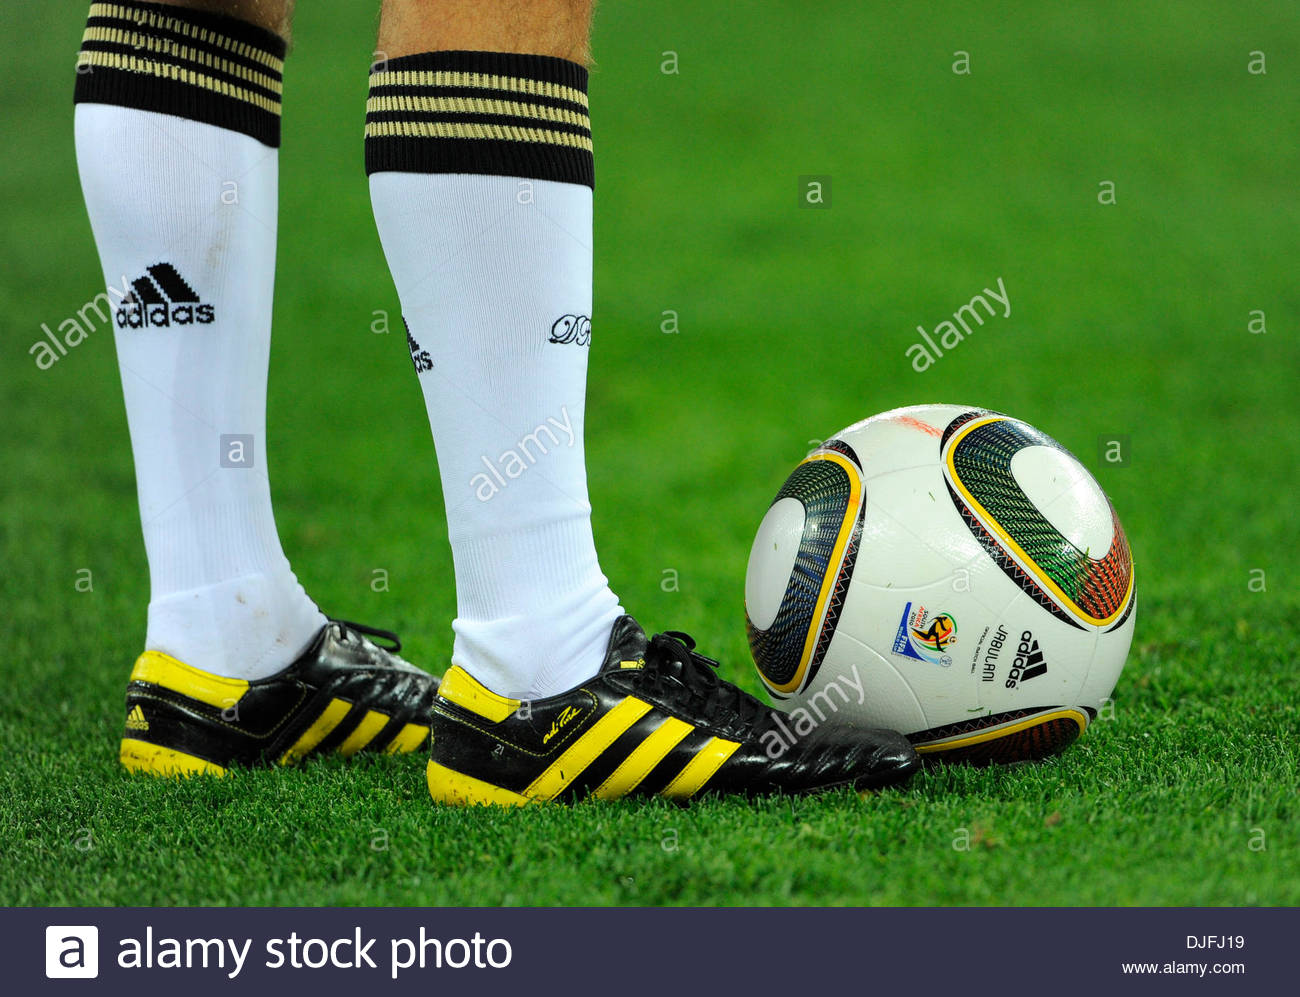 adidas 2010 world cup